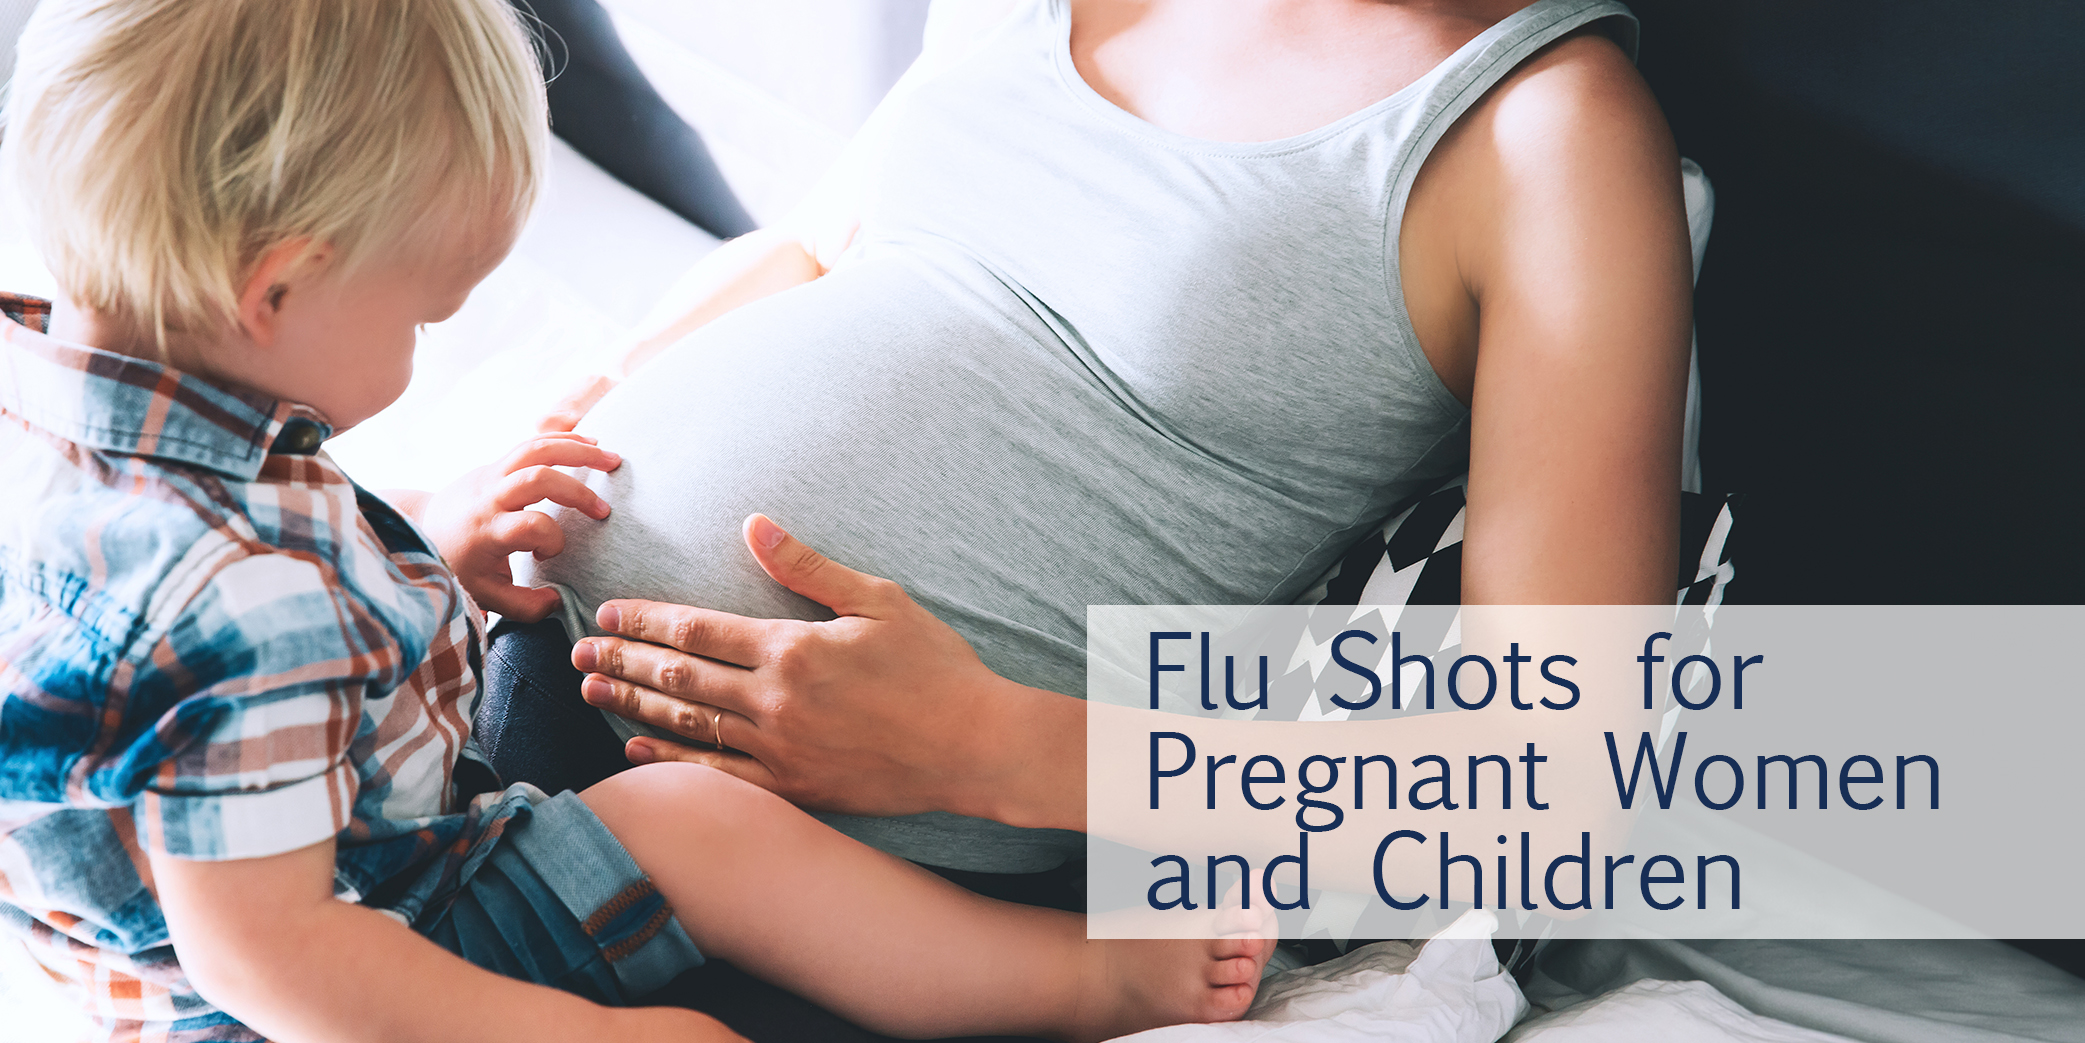 Flu shots for pregnant women and children